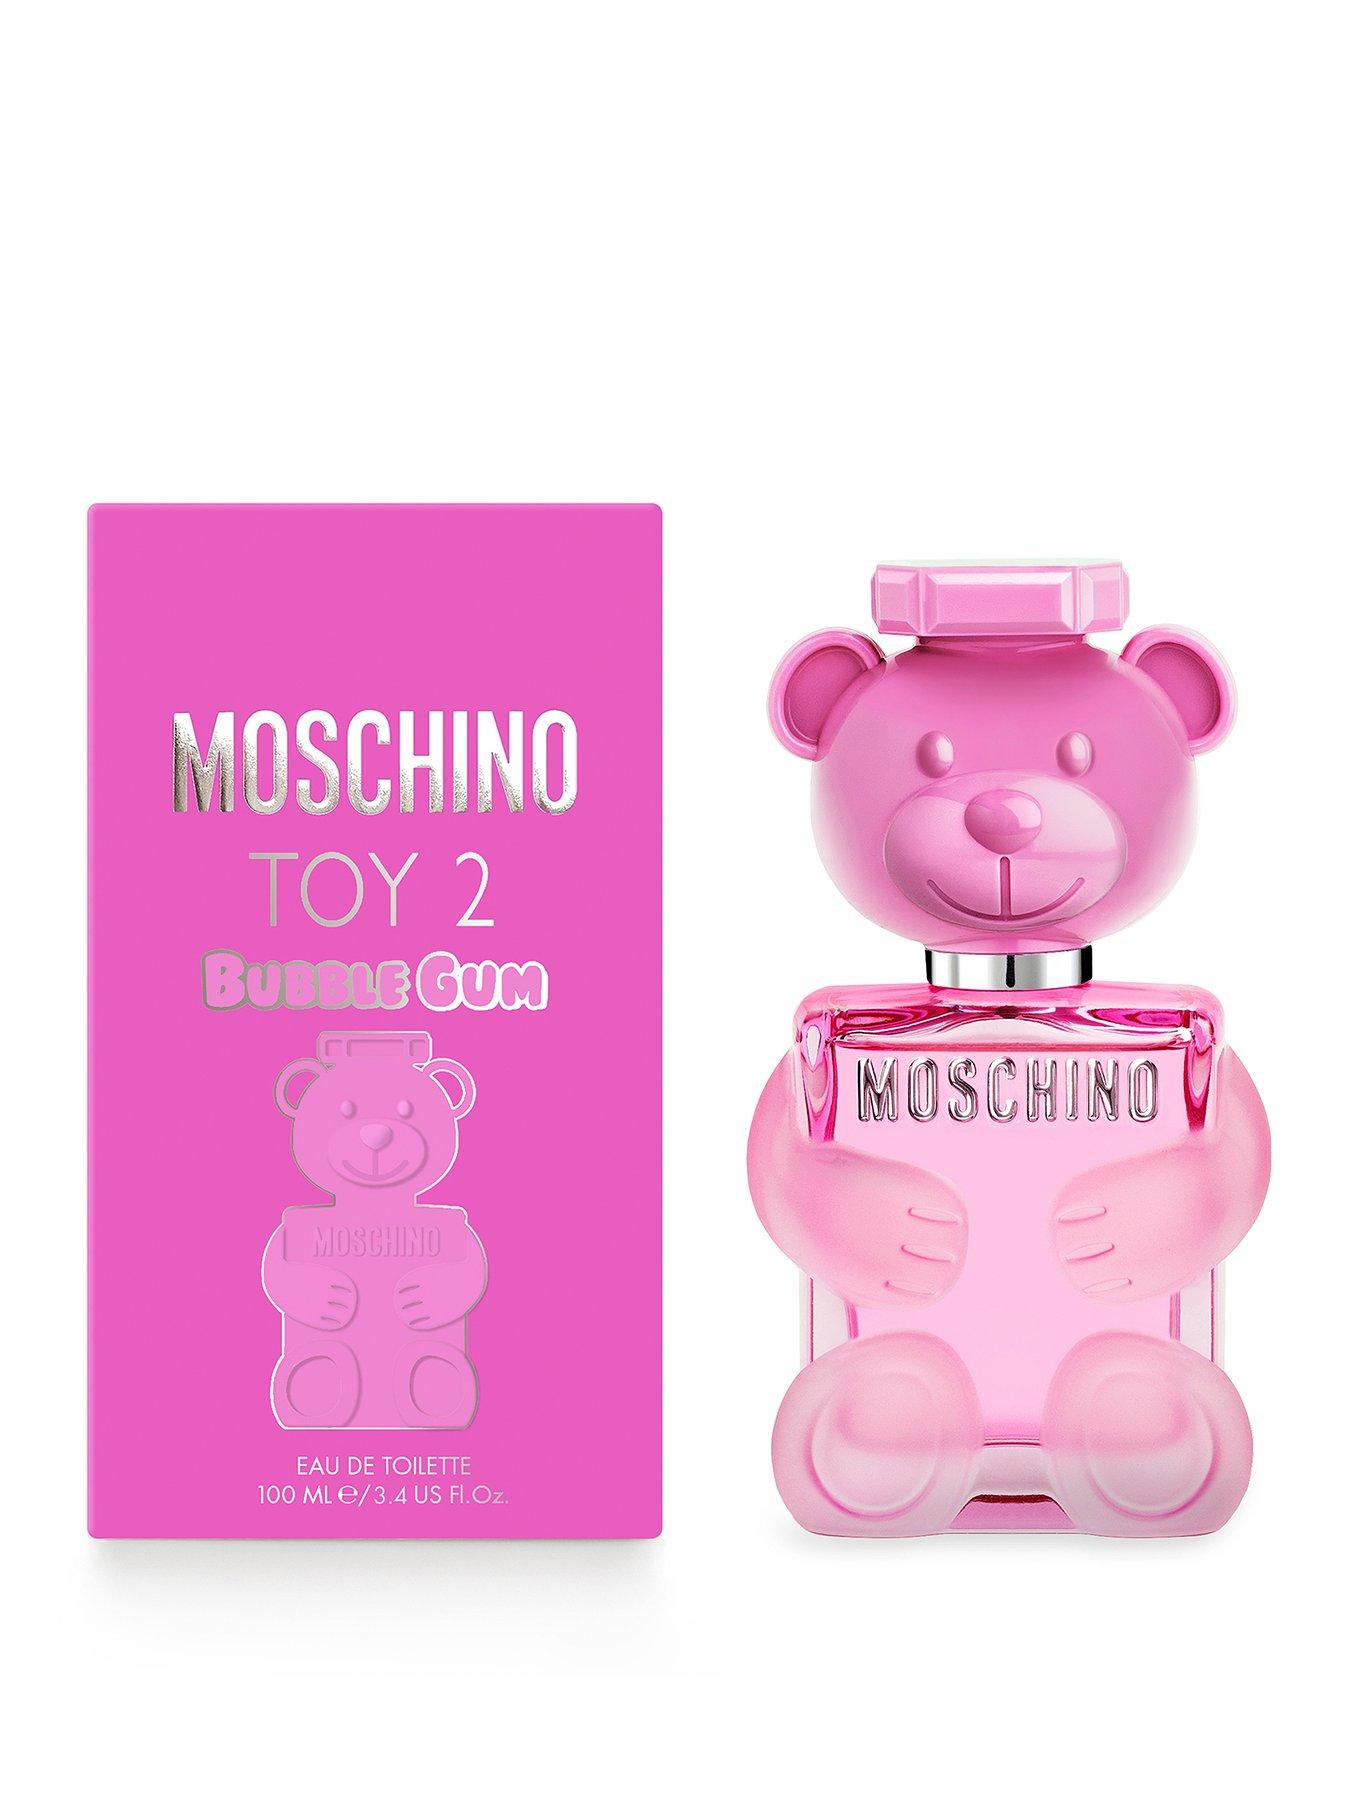 Moschino Toy2 Bubblegum 100ml Eau de Toilette | Very.co.uk